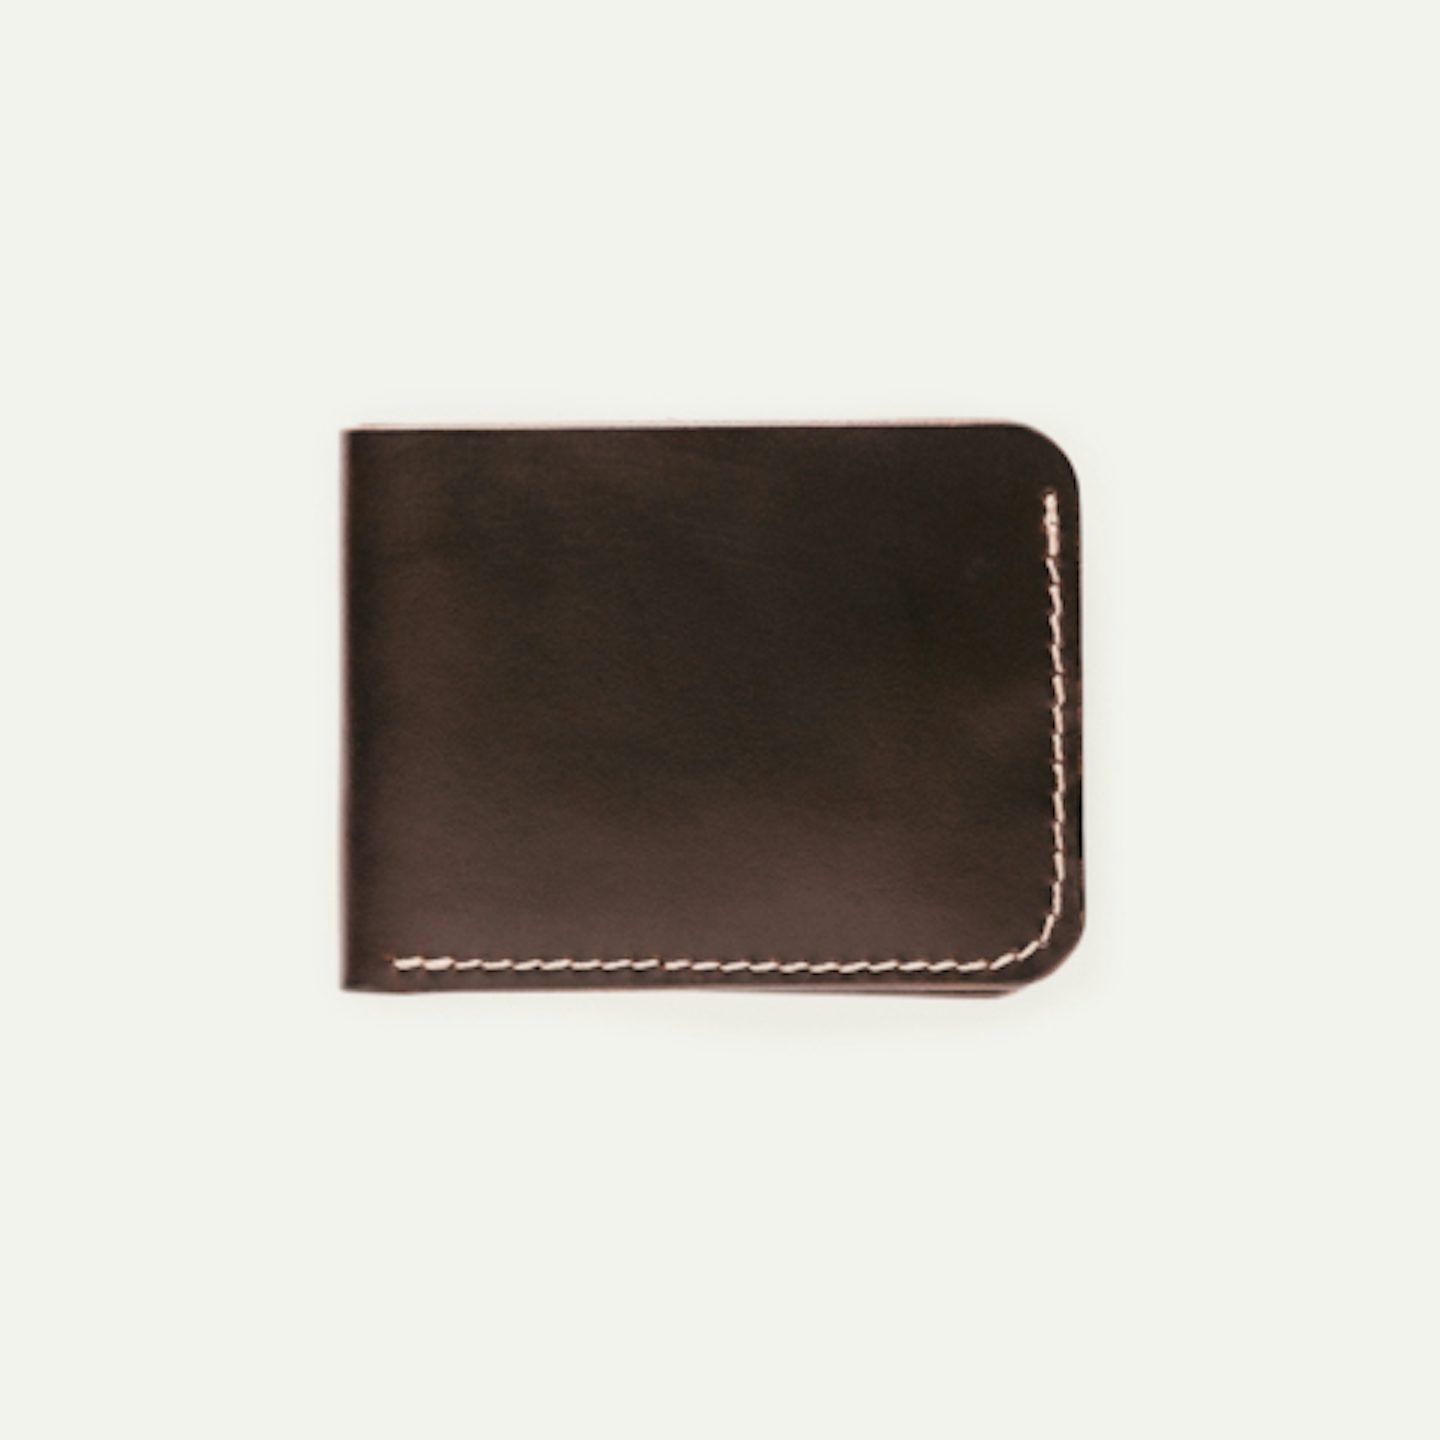 Leather Billfold Wallet - Brown, Brown